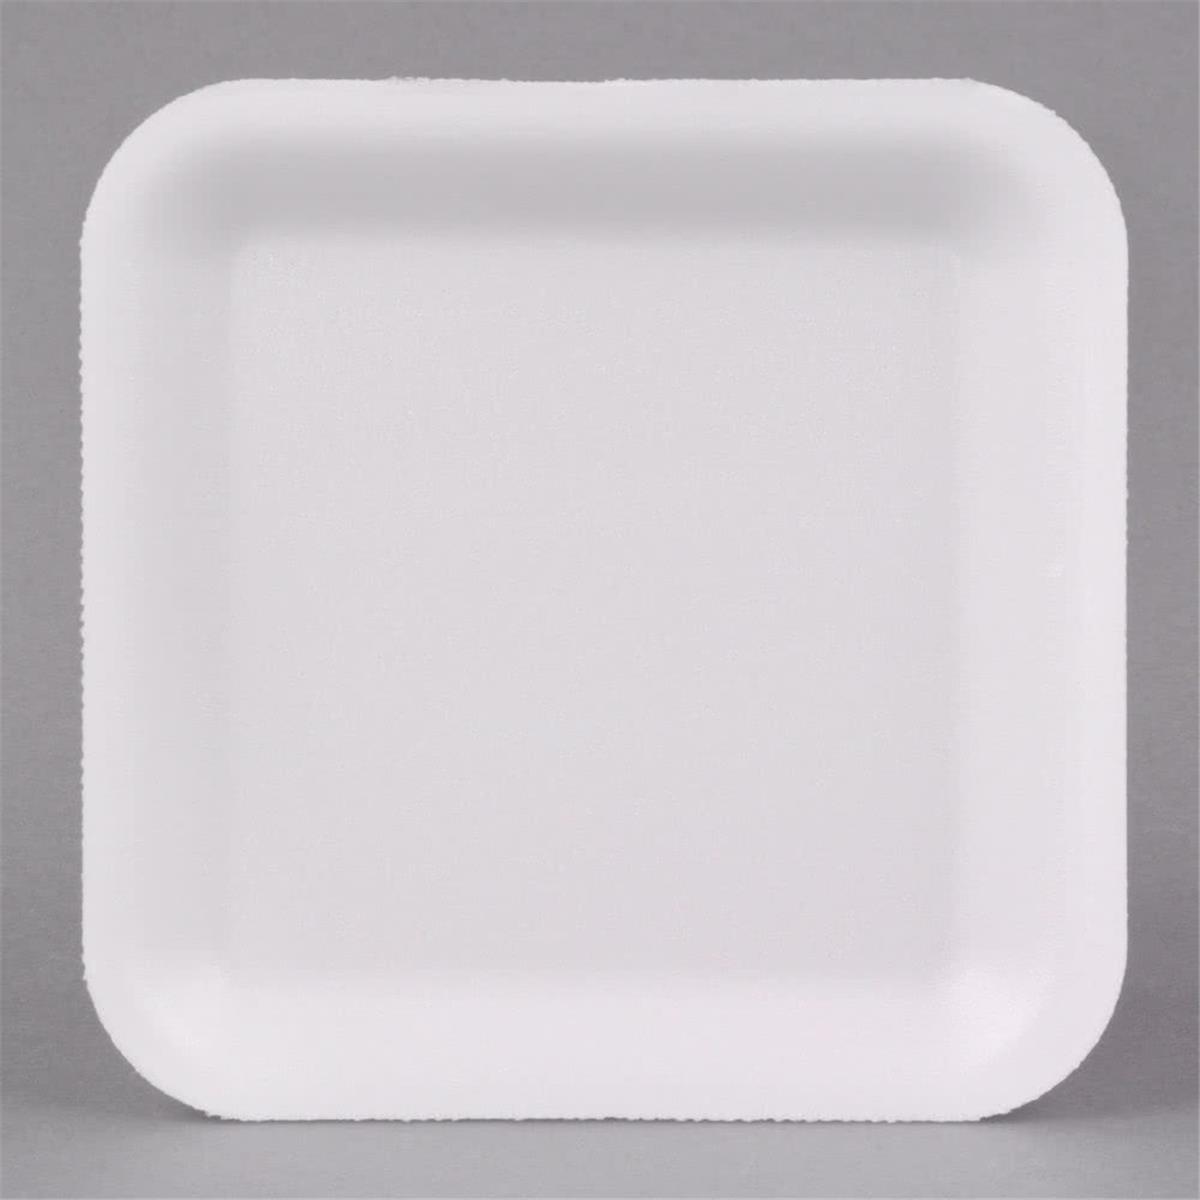 201017sw00 Cpc Foam Tray, White - Case Of 1000